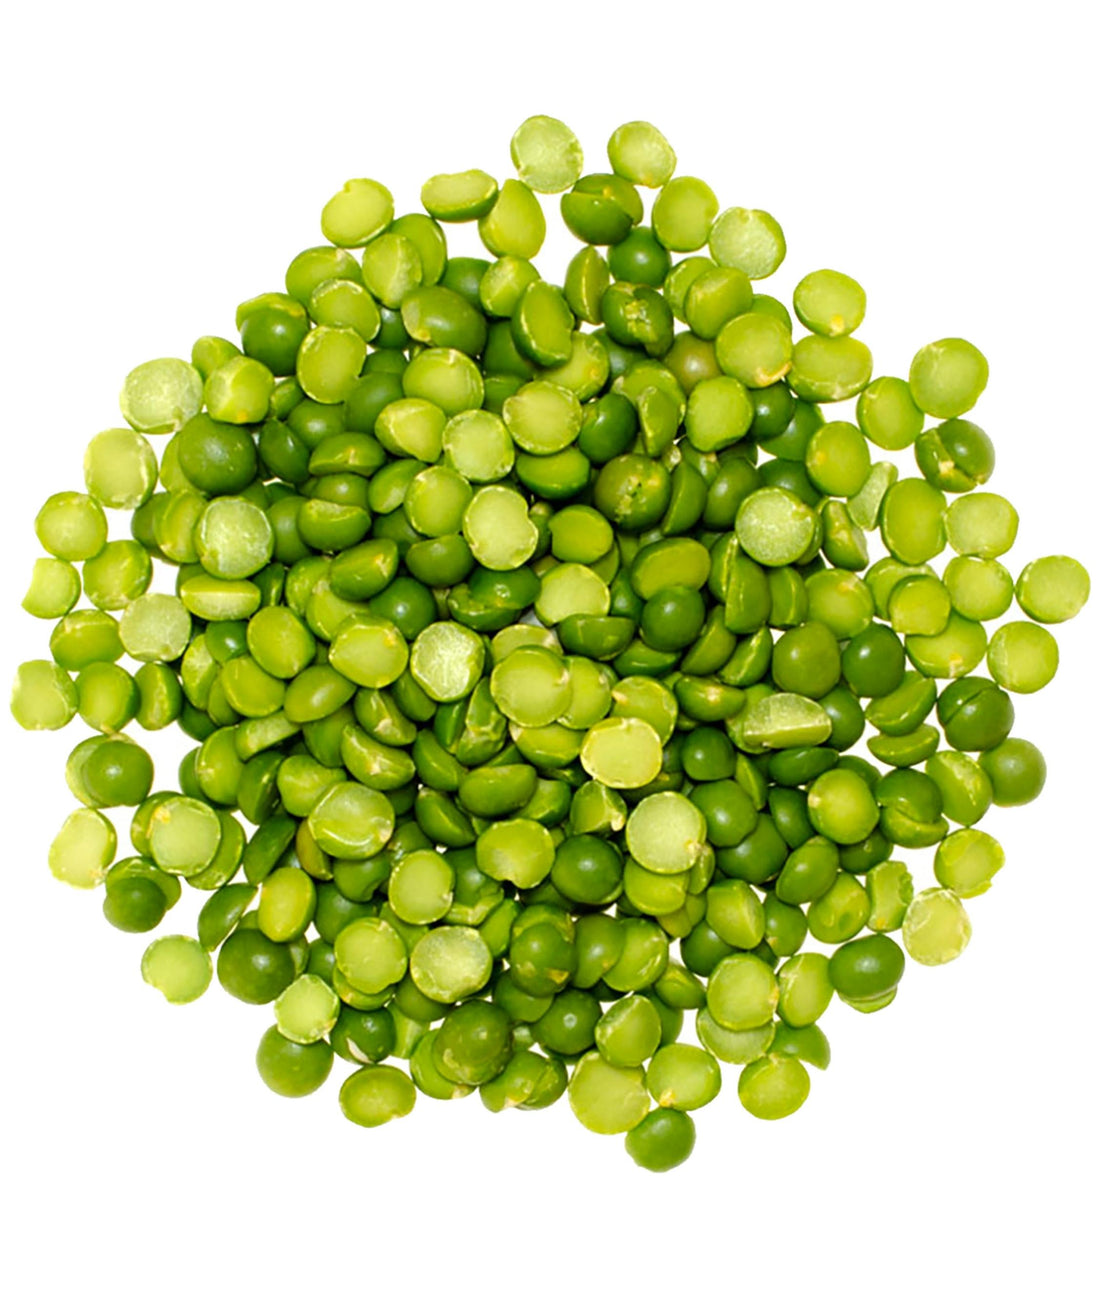 Green Split Peas | 25 LB Bucket